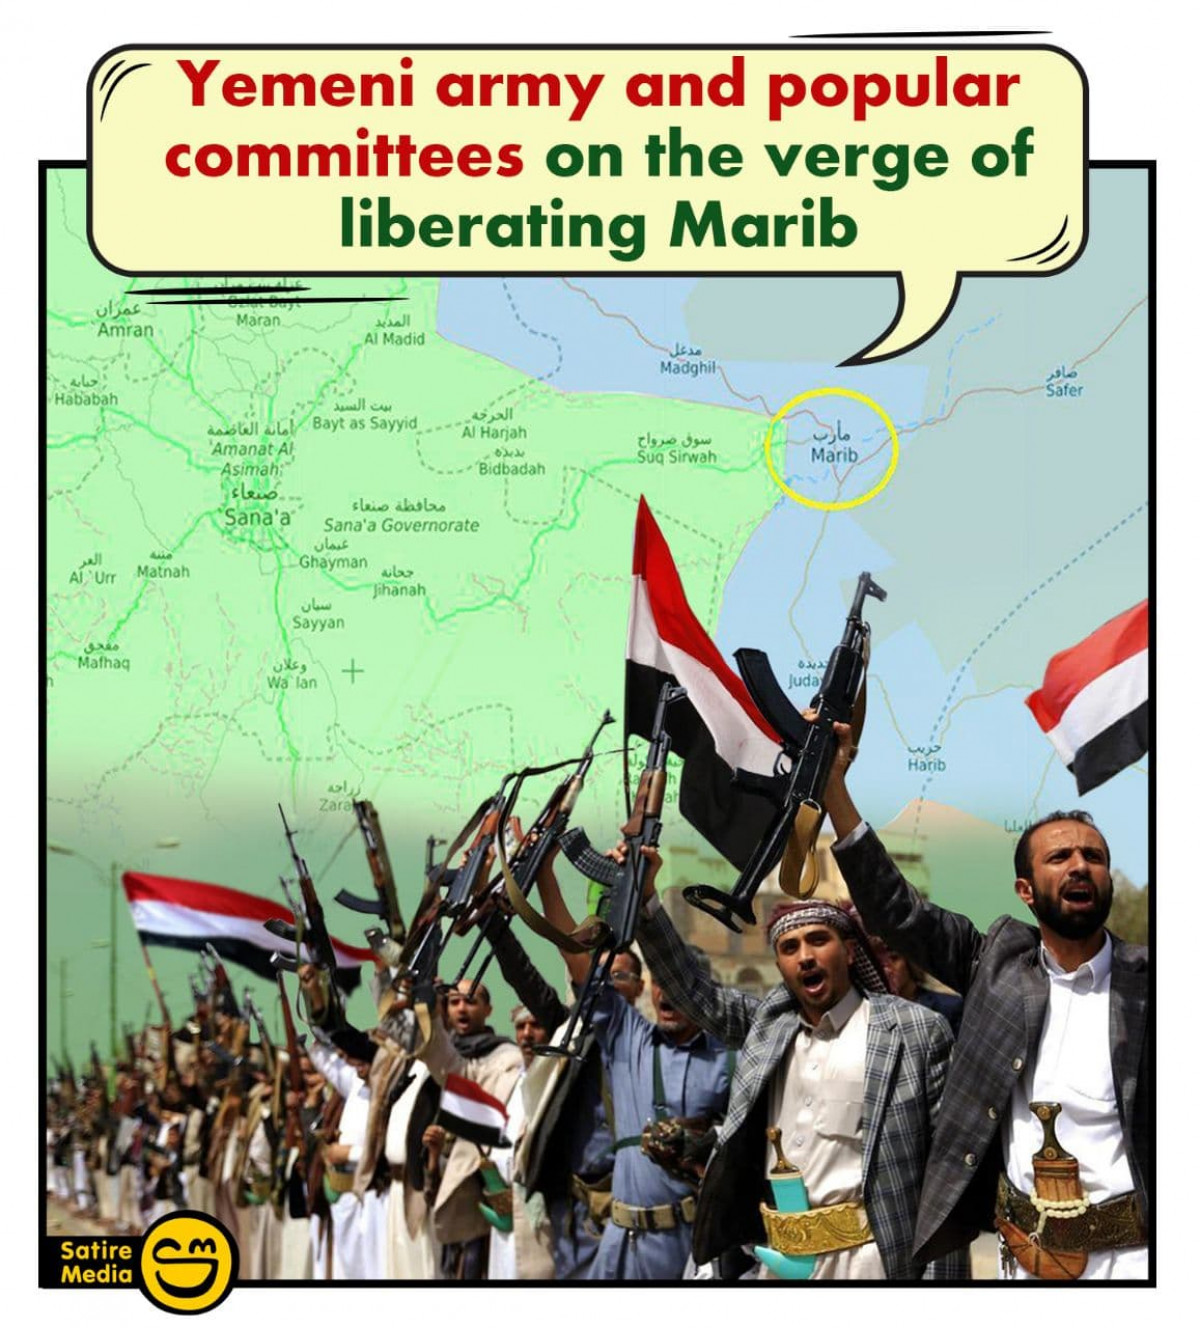 Yemeni army and popular committees on the verge of liberating Marib